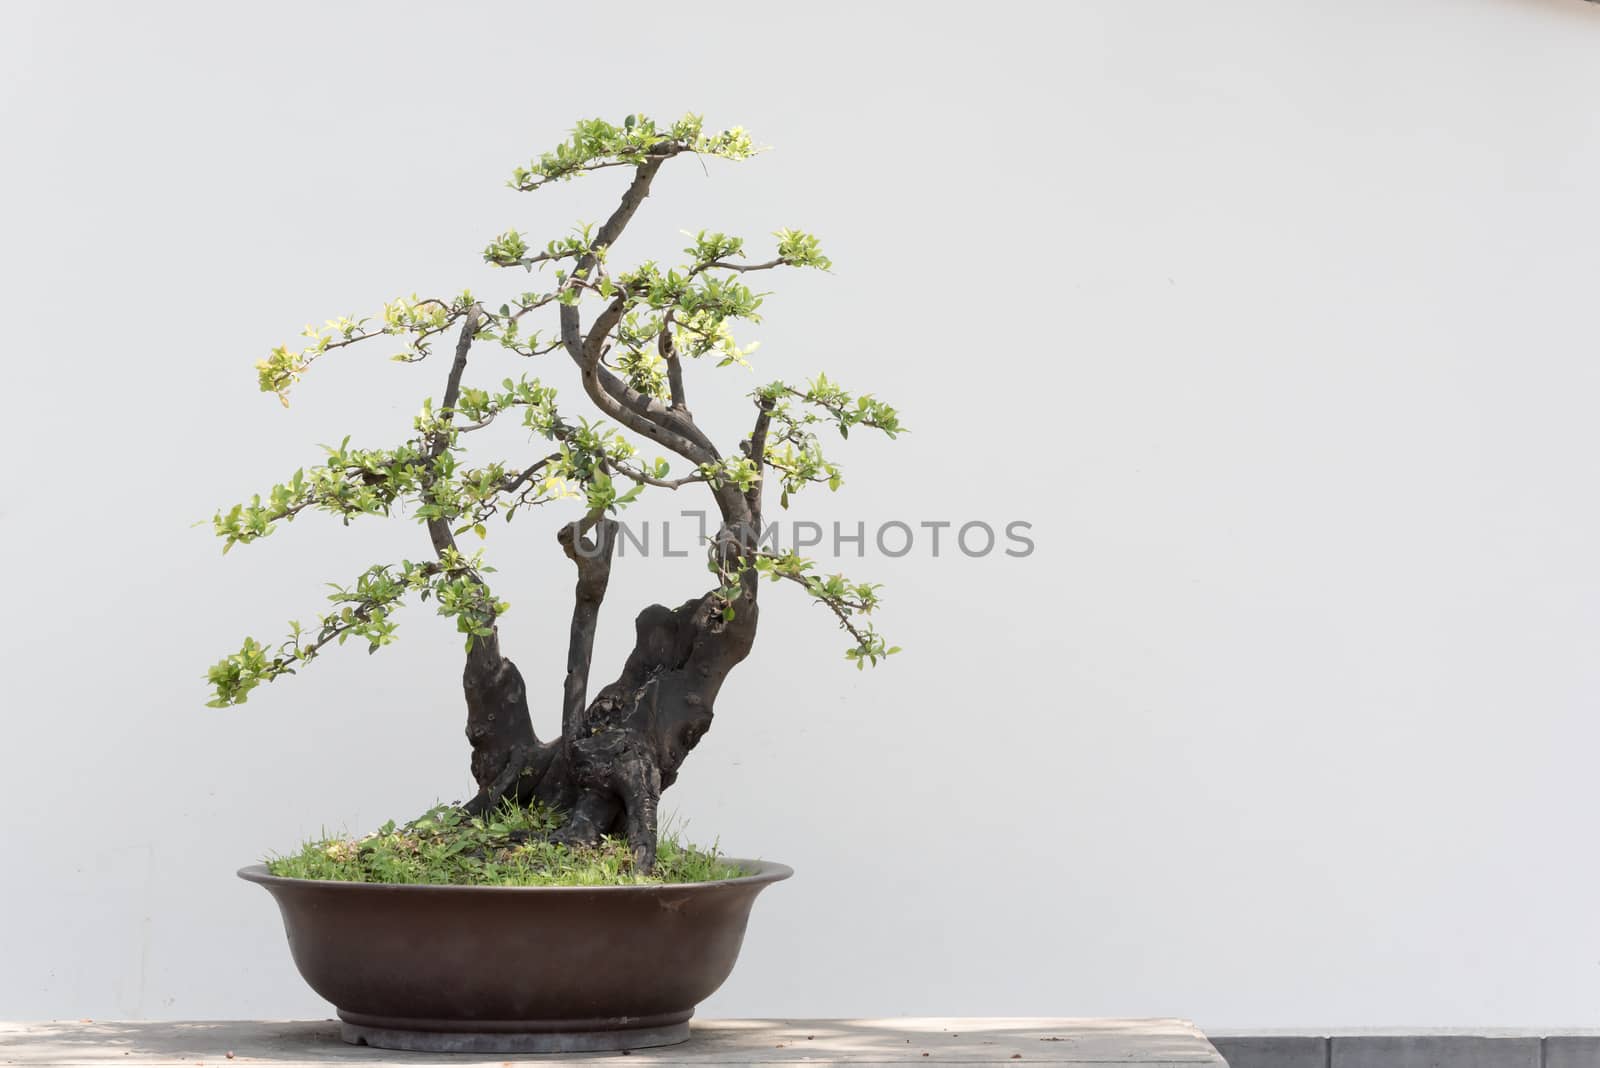 Bonsai tree on a table against white wall in BaiHuaTan public park, Chengdu, China